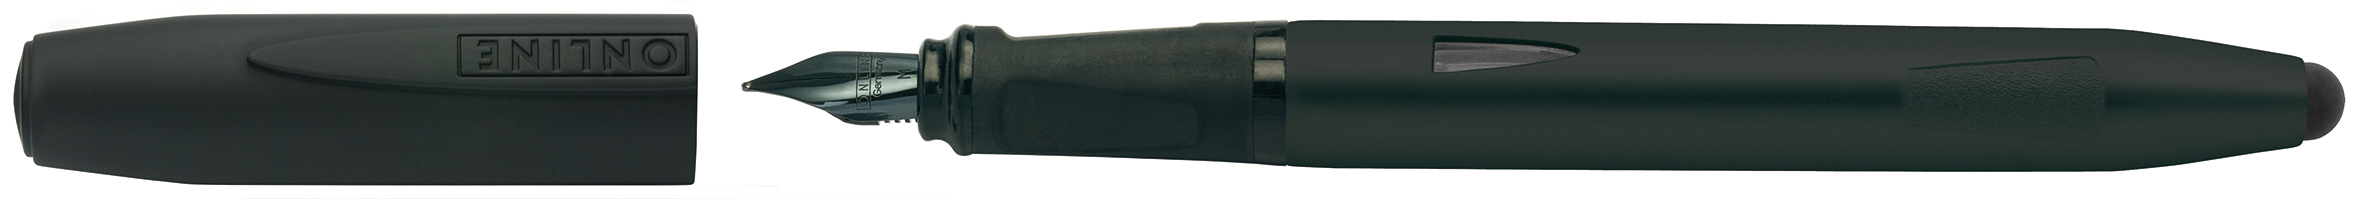 ONLINE Stylo plume Switch 0.5mm 25040/3D Nero